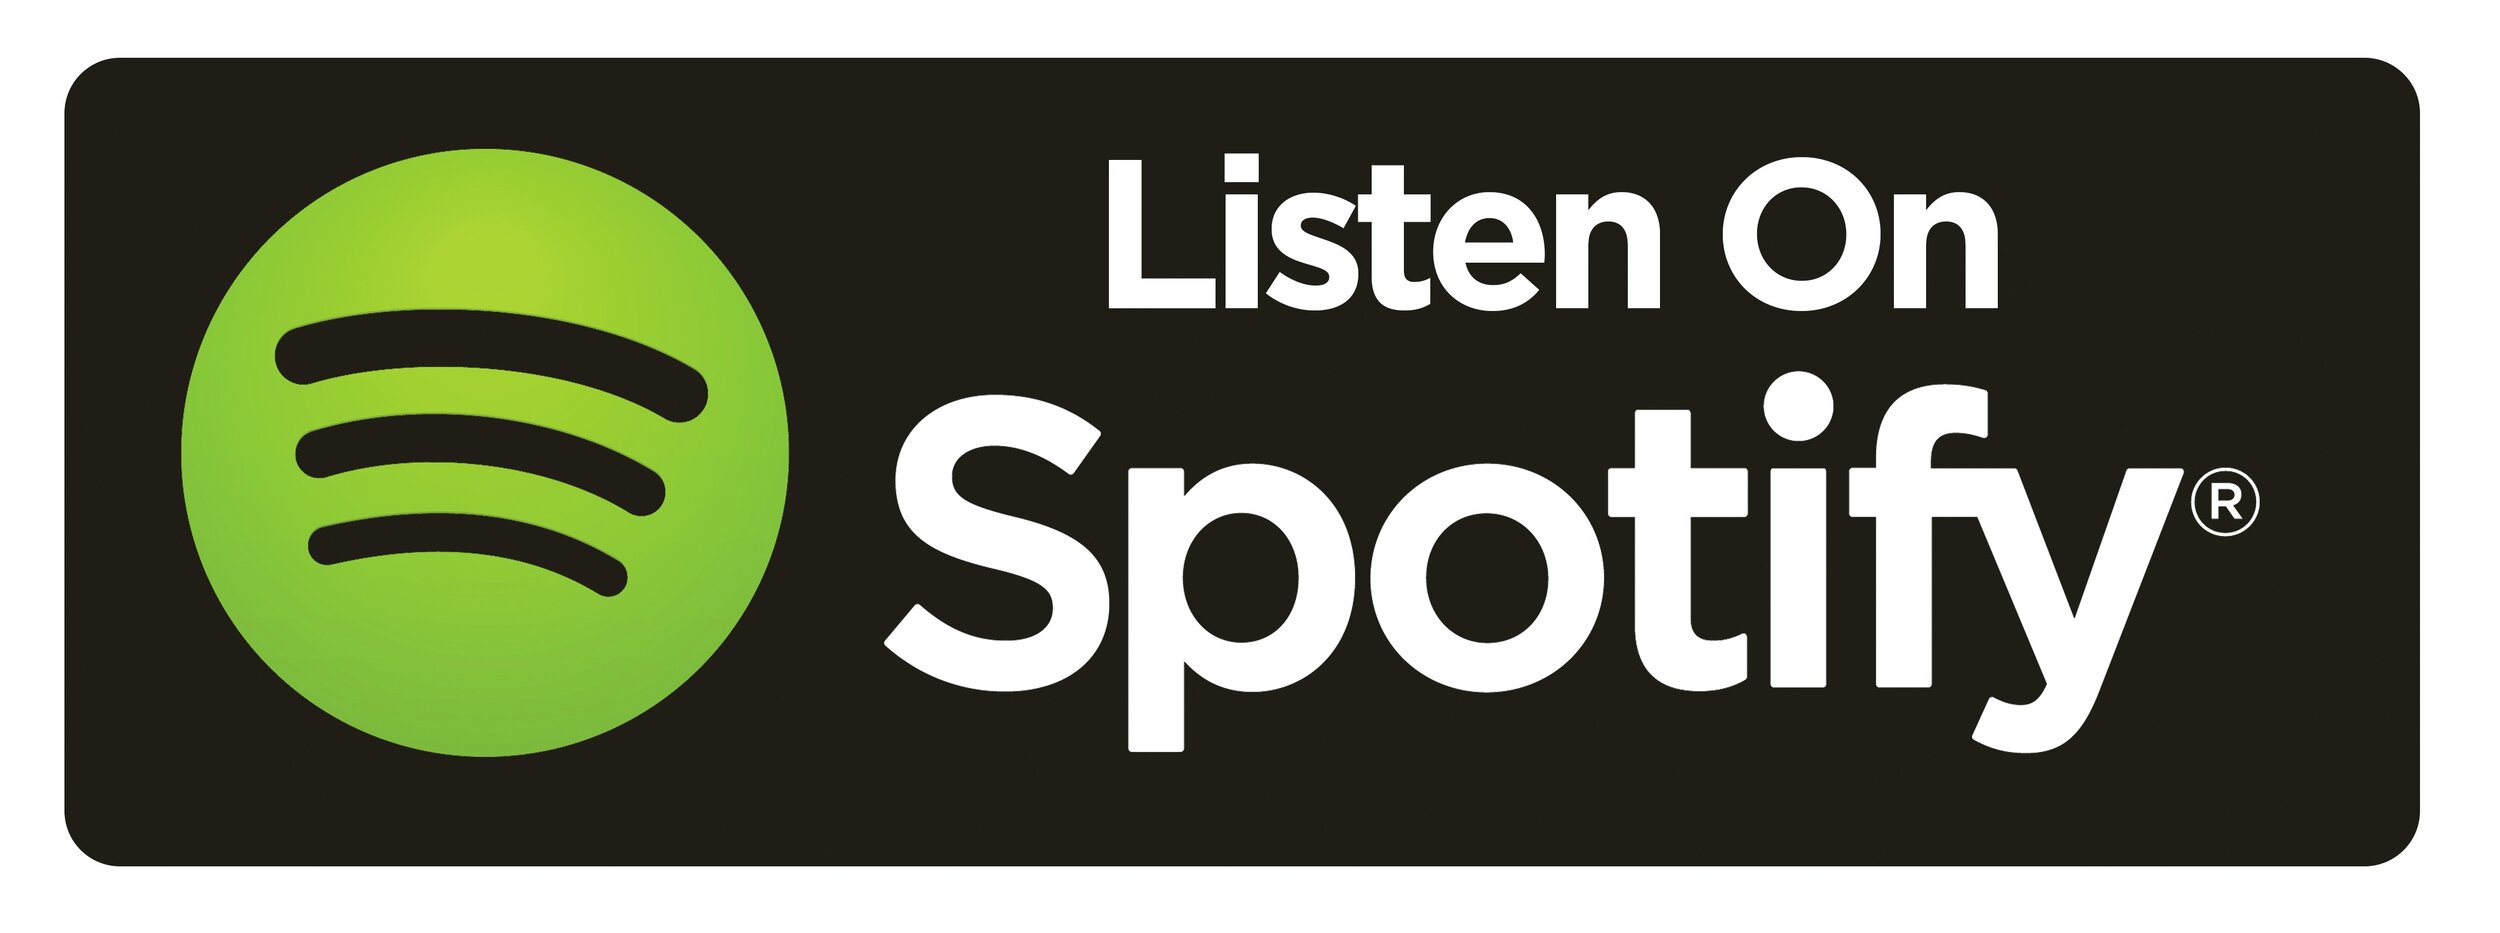 Listen-on-Spotify-badge-button.jpg